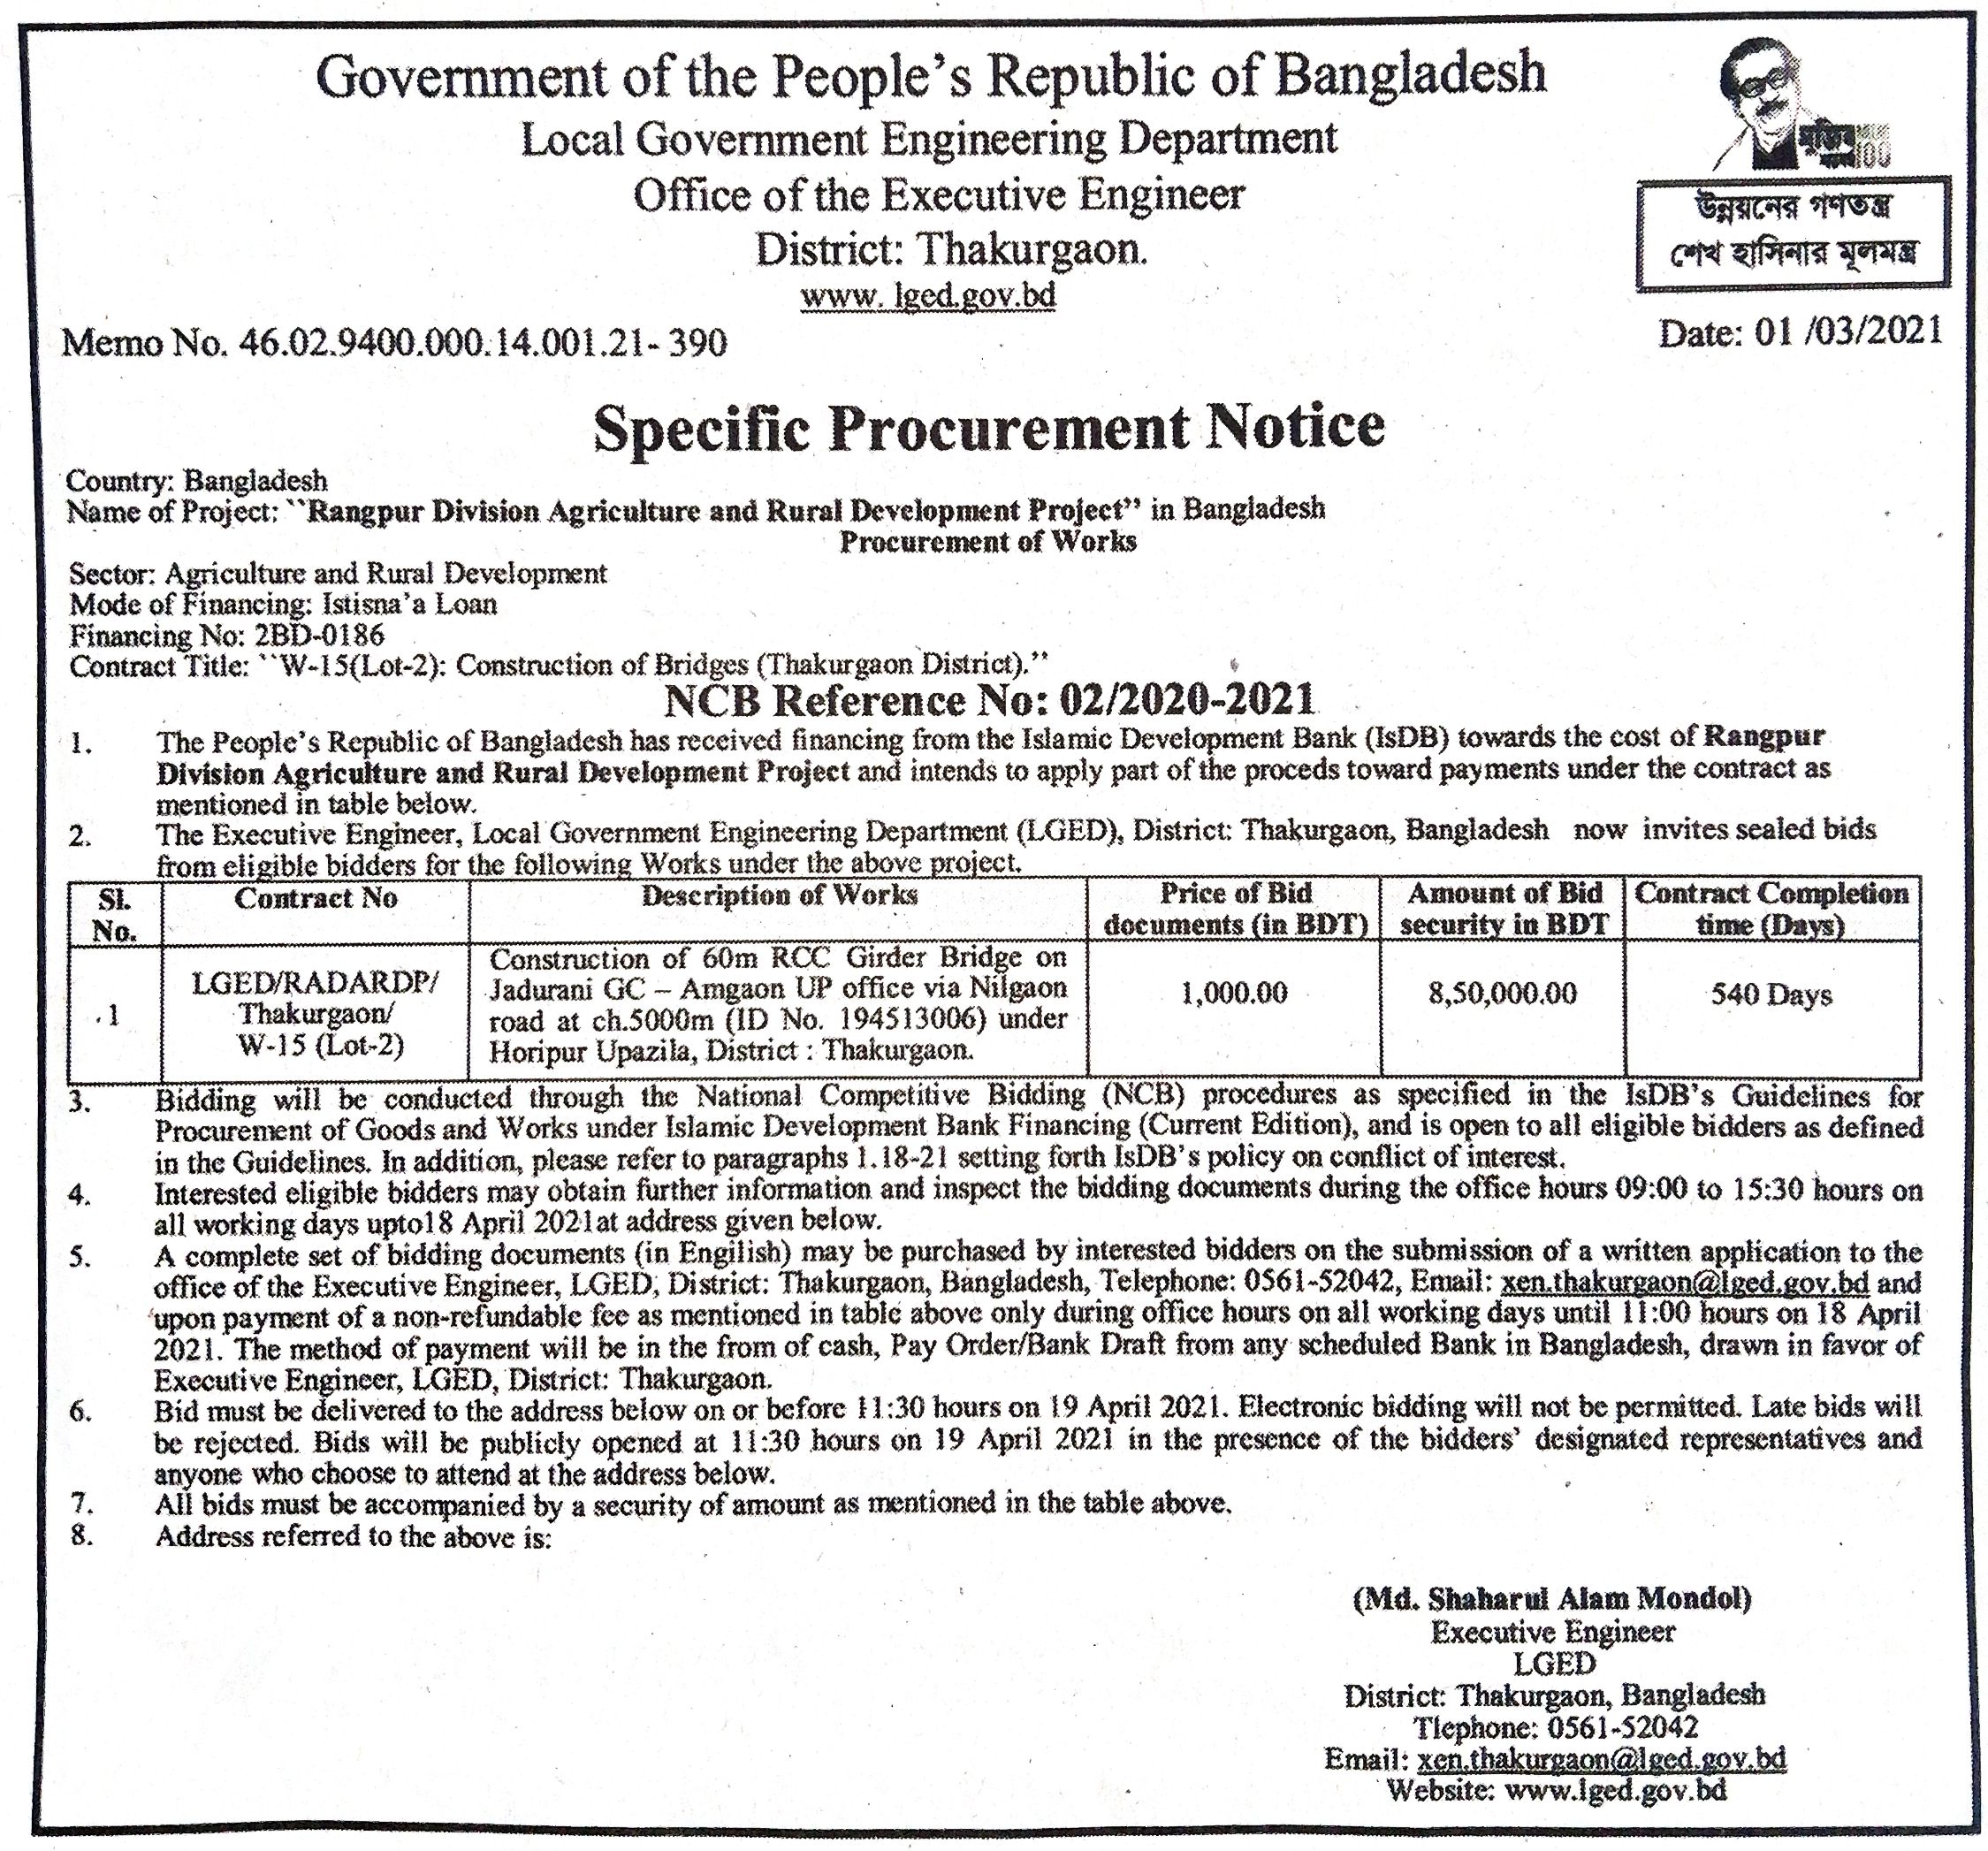 Specific Procurement Notice -Govt. Of the People Republic of Bangladesh